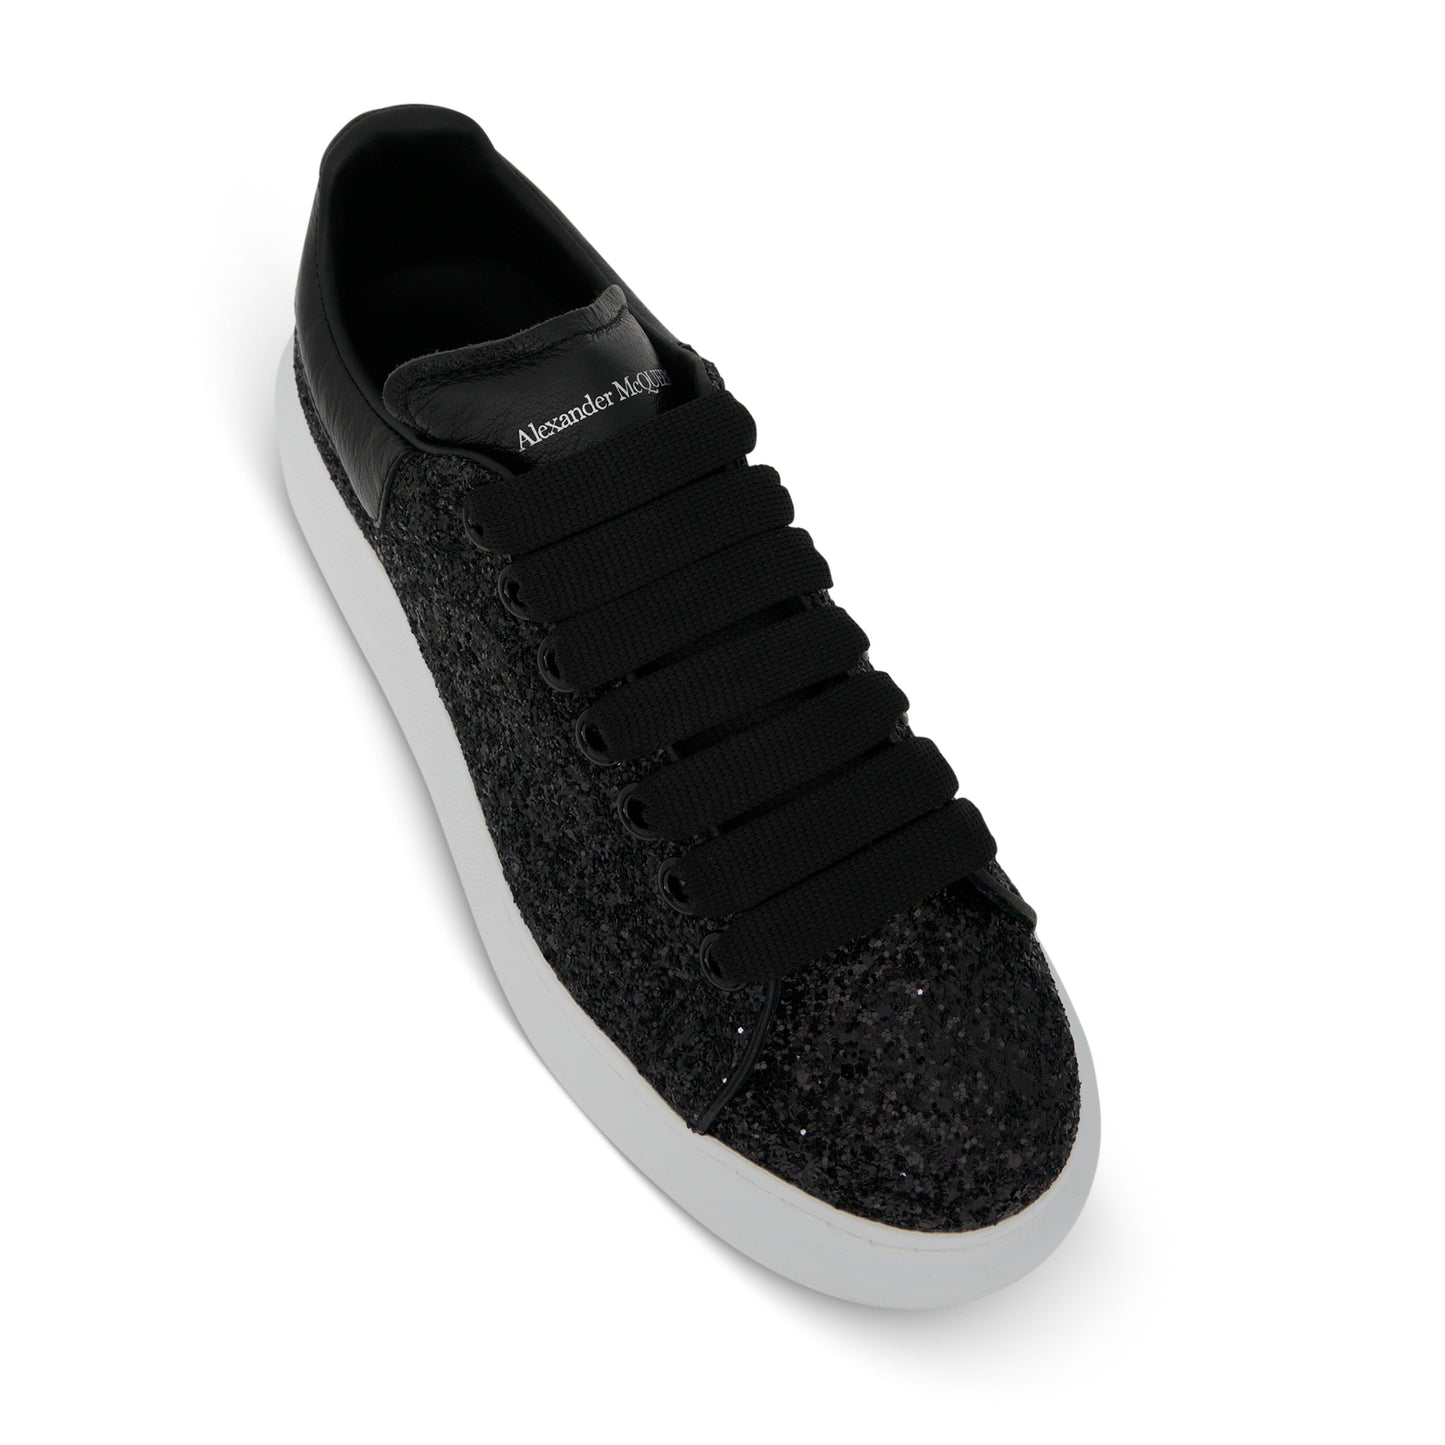 Larry Oversized Heel Sneakers in Black/Black